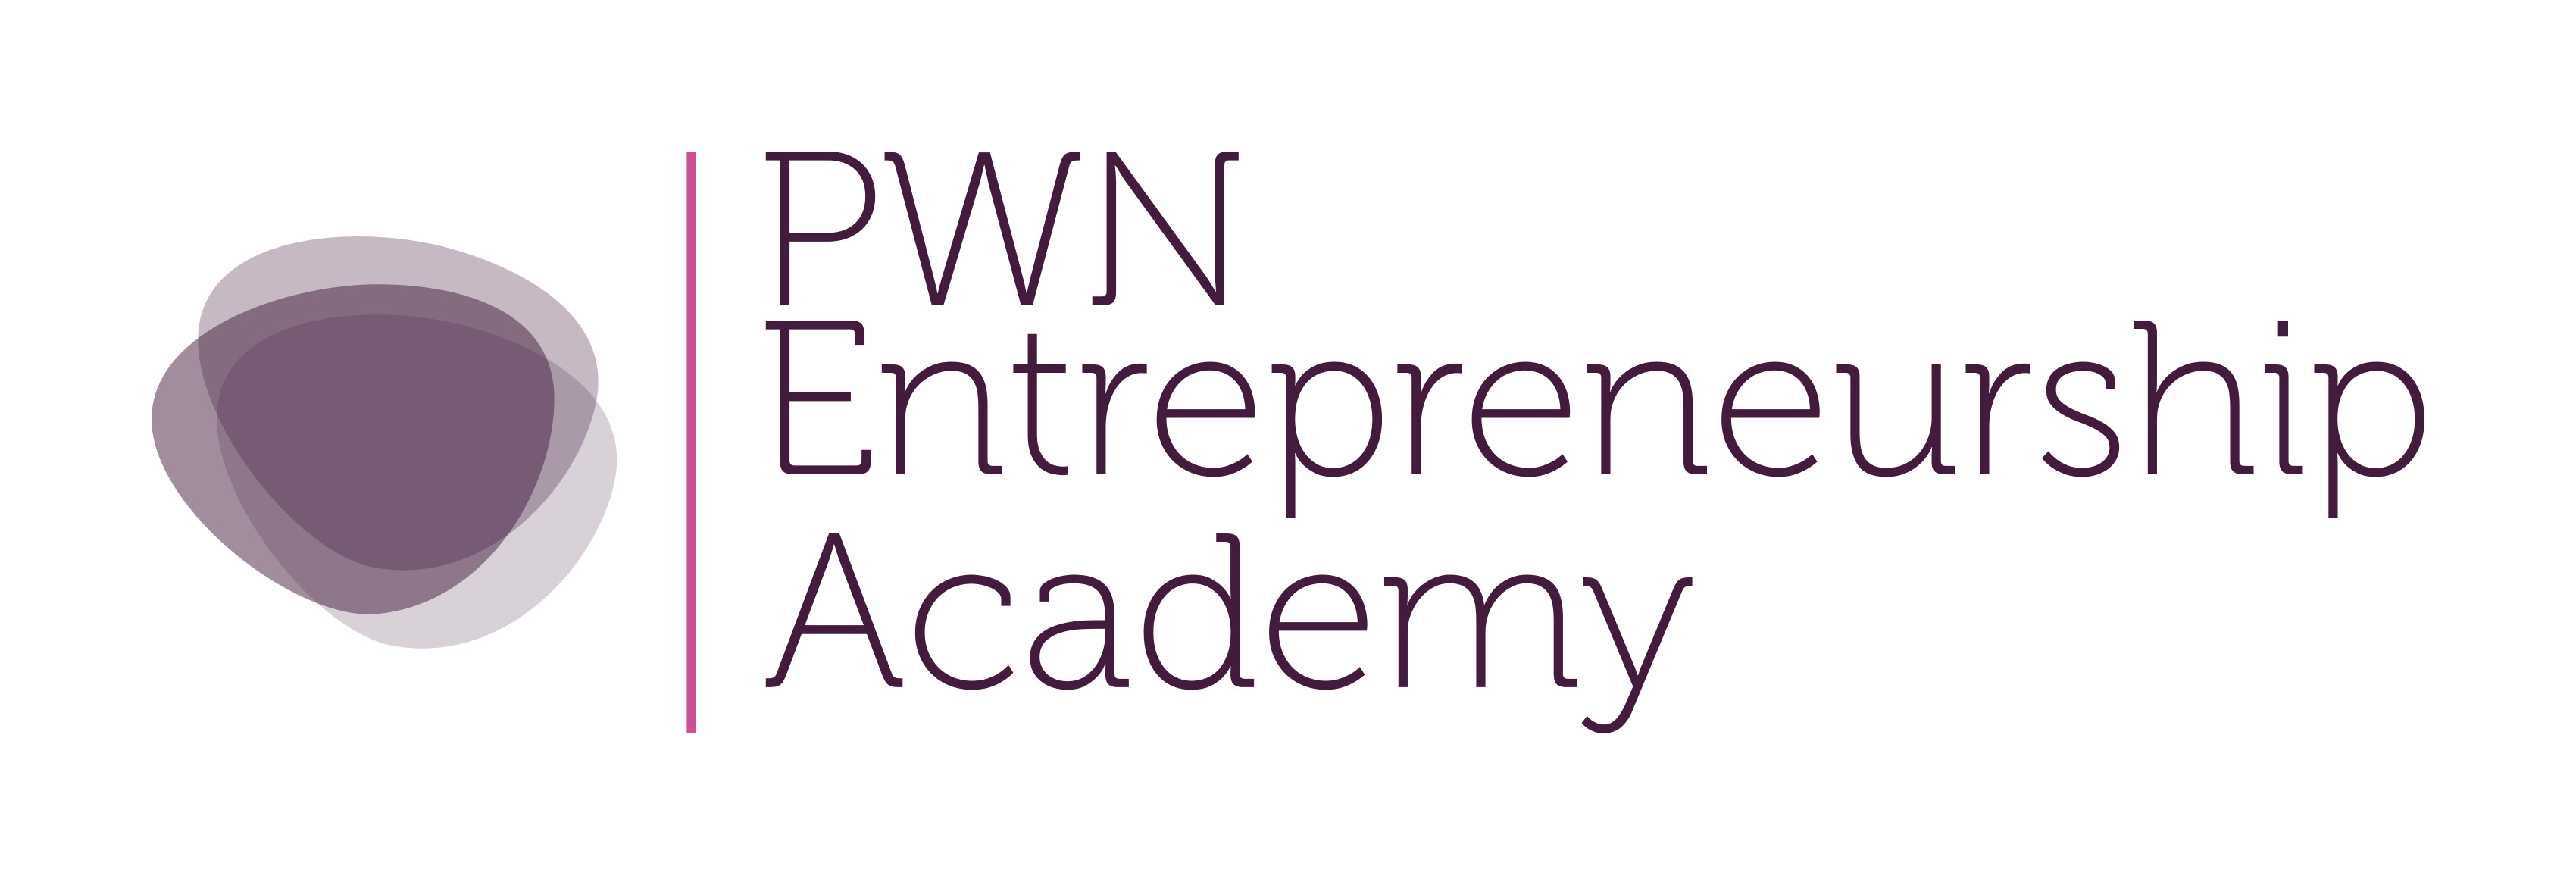 PWN Global Entrepreneurship Academy